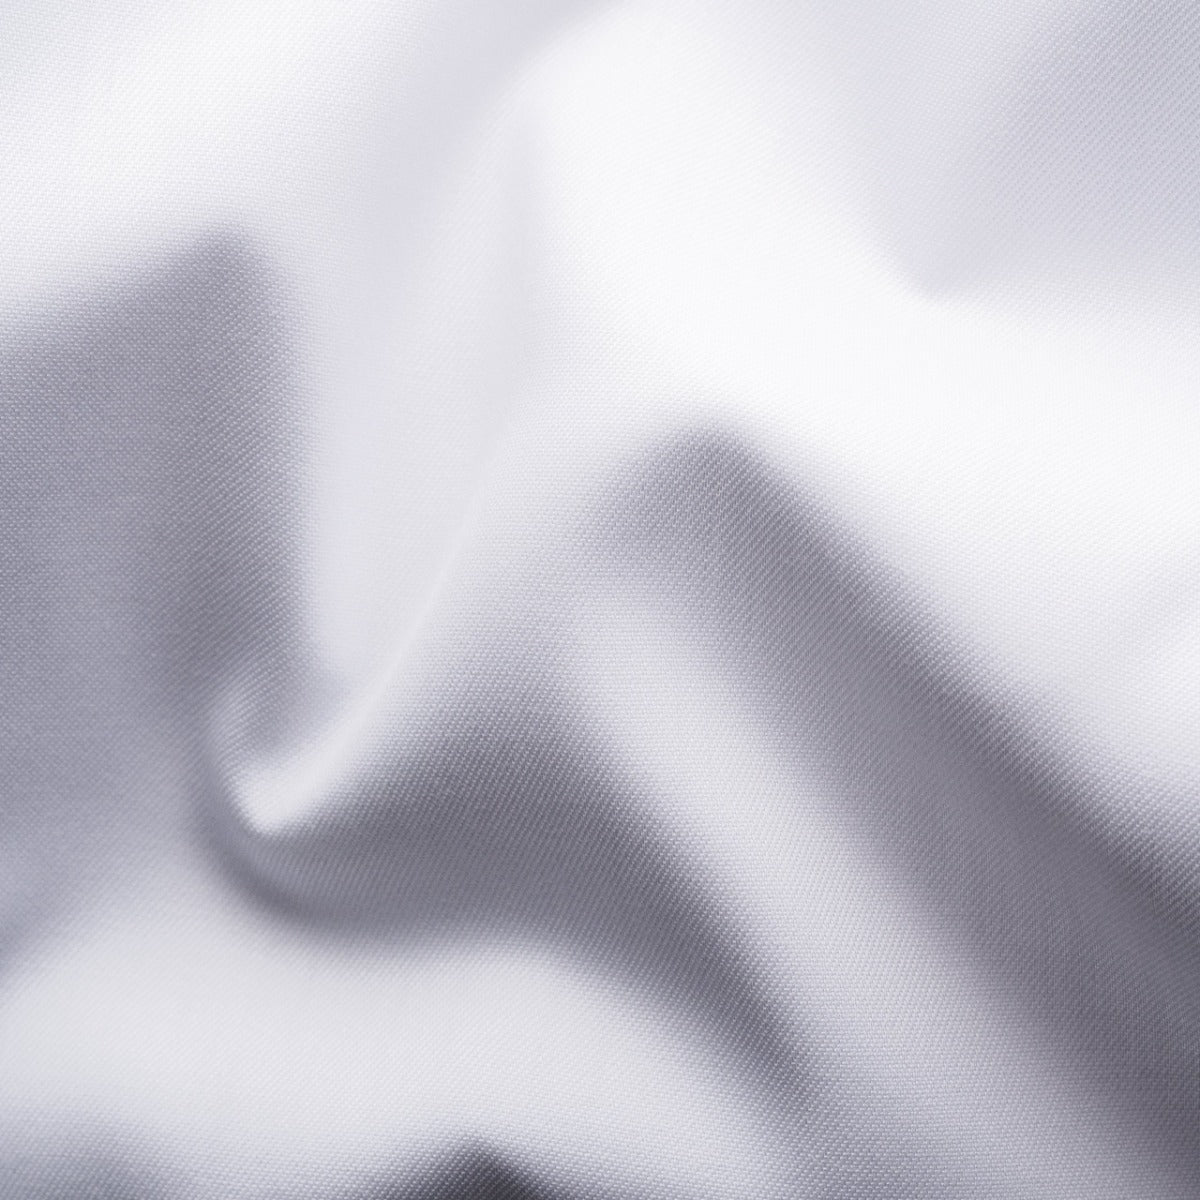 White Micro Print Signature Twill Shirt  Eton   